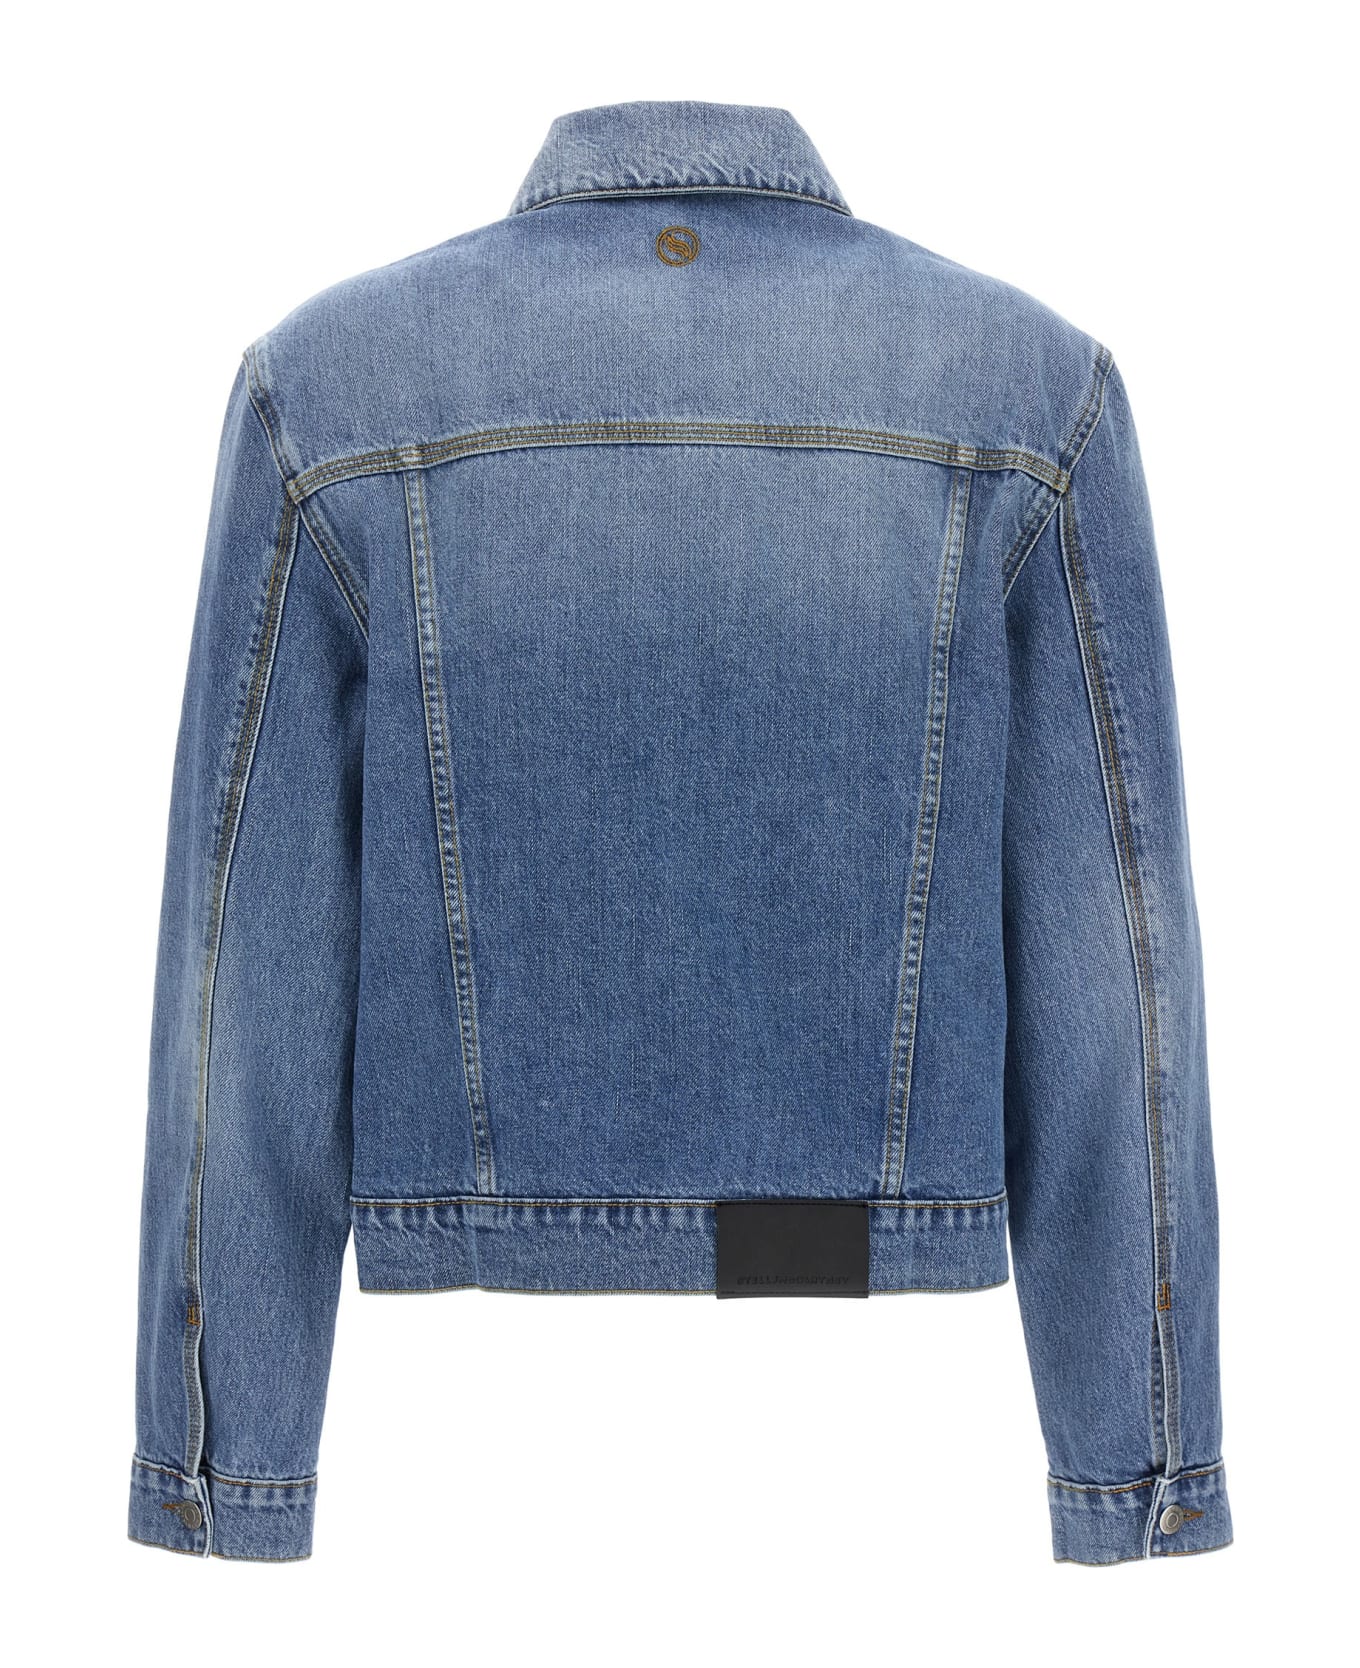 Stella McCartney Iconic Falabella Chain Denim Jacket - Mid Vintage Blue ジャケット